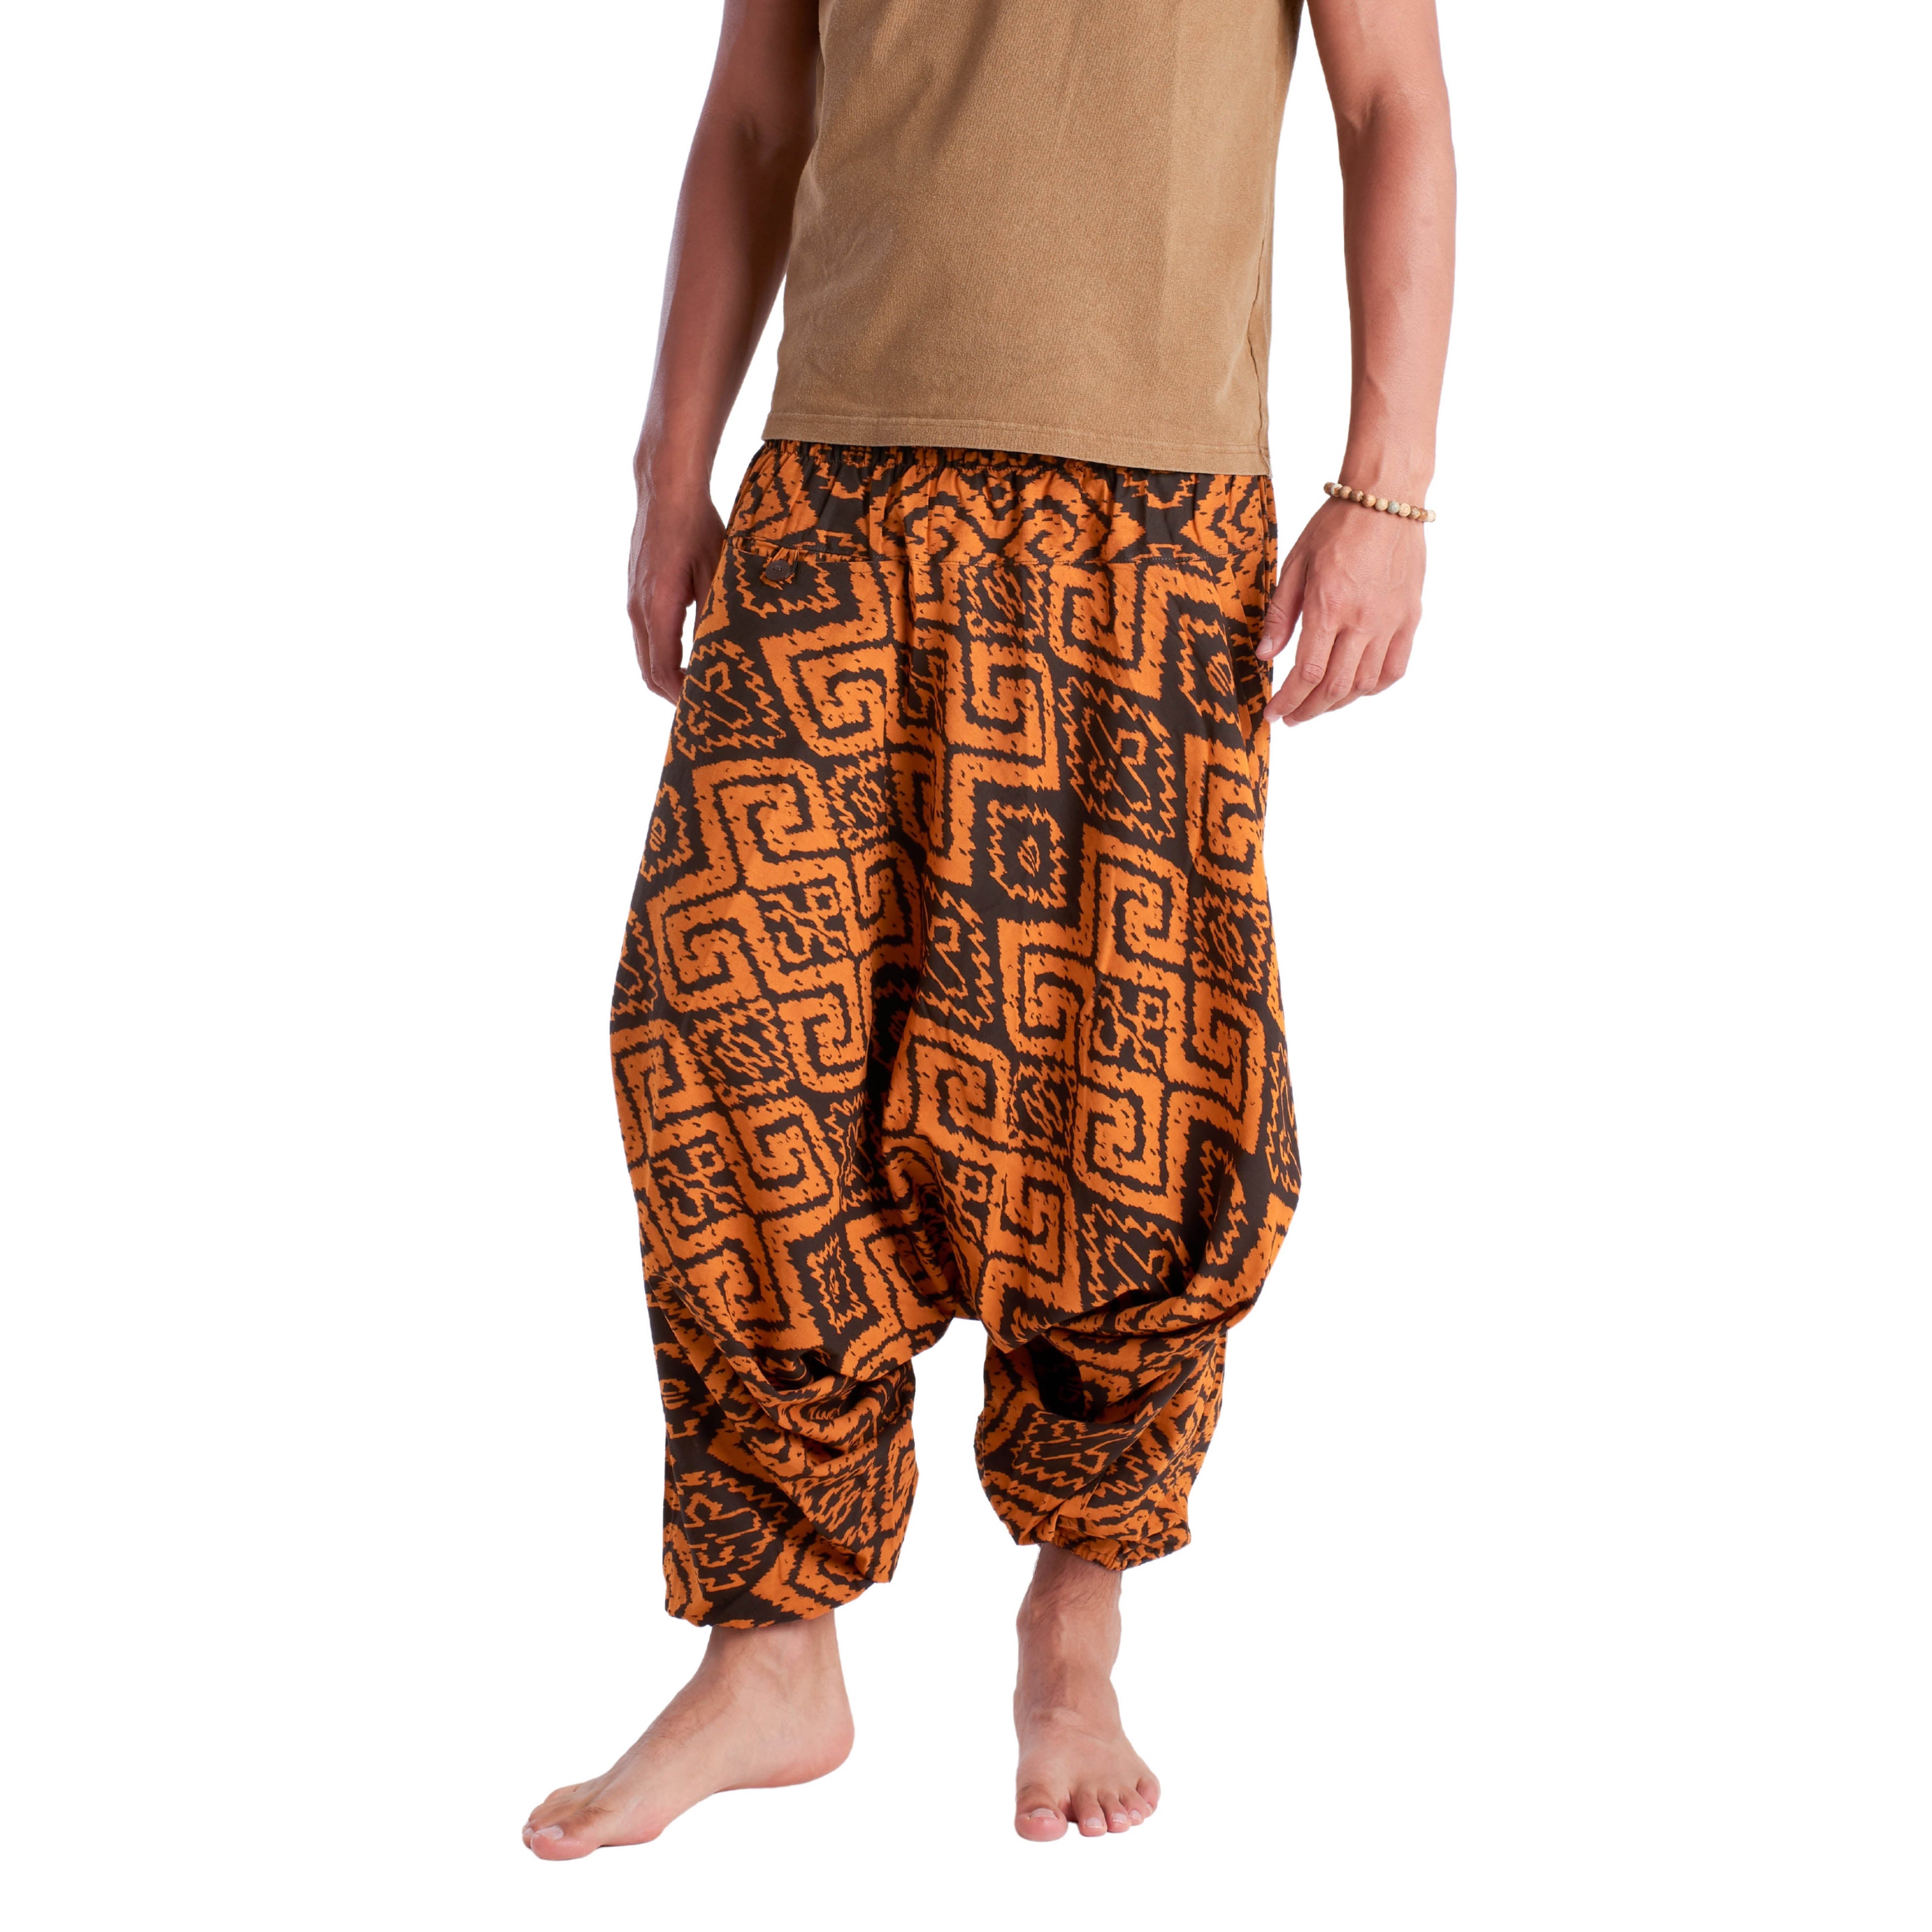 MAYA TRIBAL PANTS Elepanta Tribal Pants - Buy Today Elephant Pants Jewelry And Bohemian Clothes Handmade In Thailand Help To Save The Elephants FairTrade And Vegan